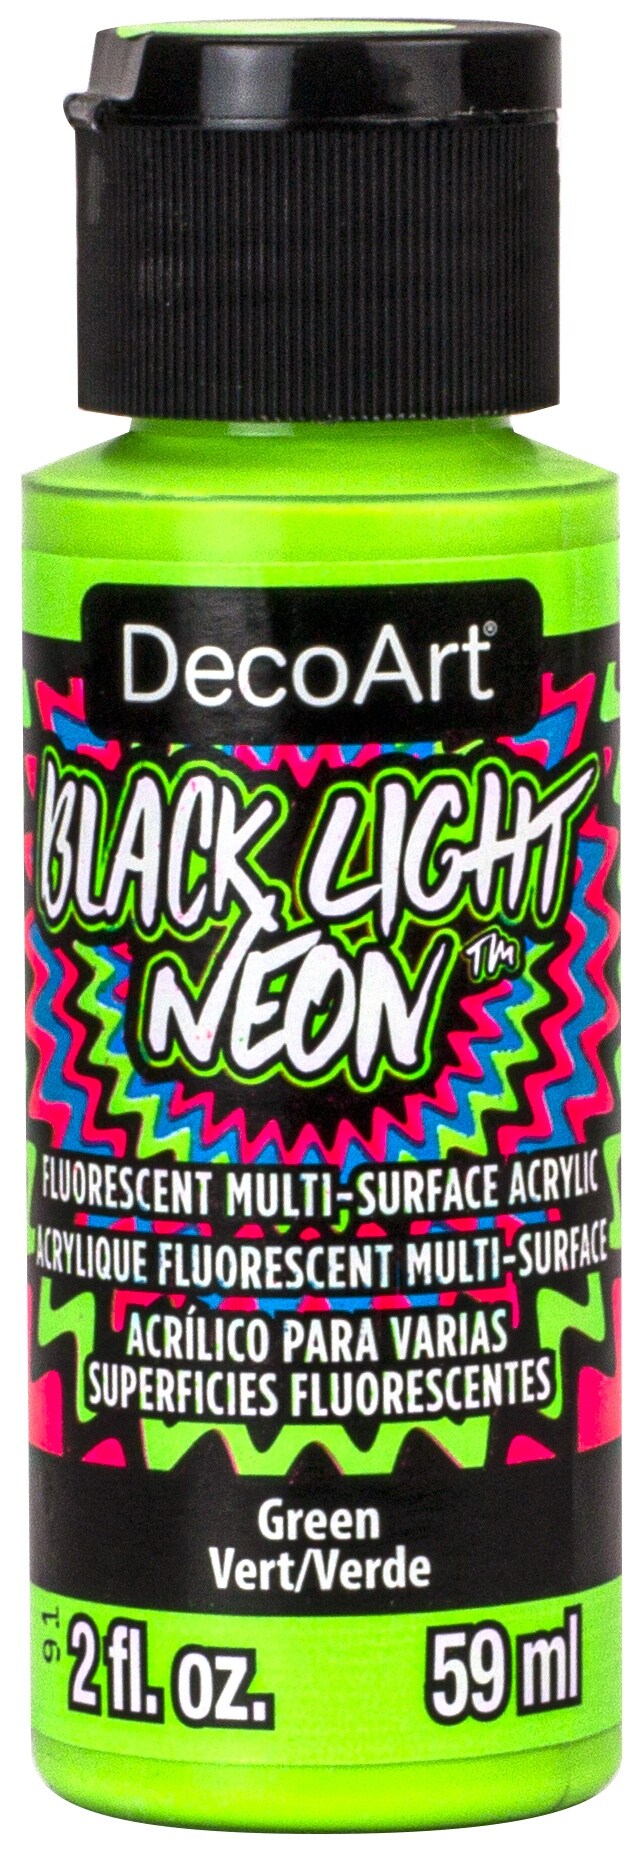 Decoart Black Light Neon Acrylic Paint 2oz - Green